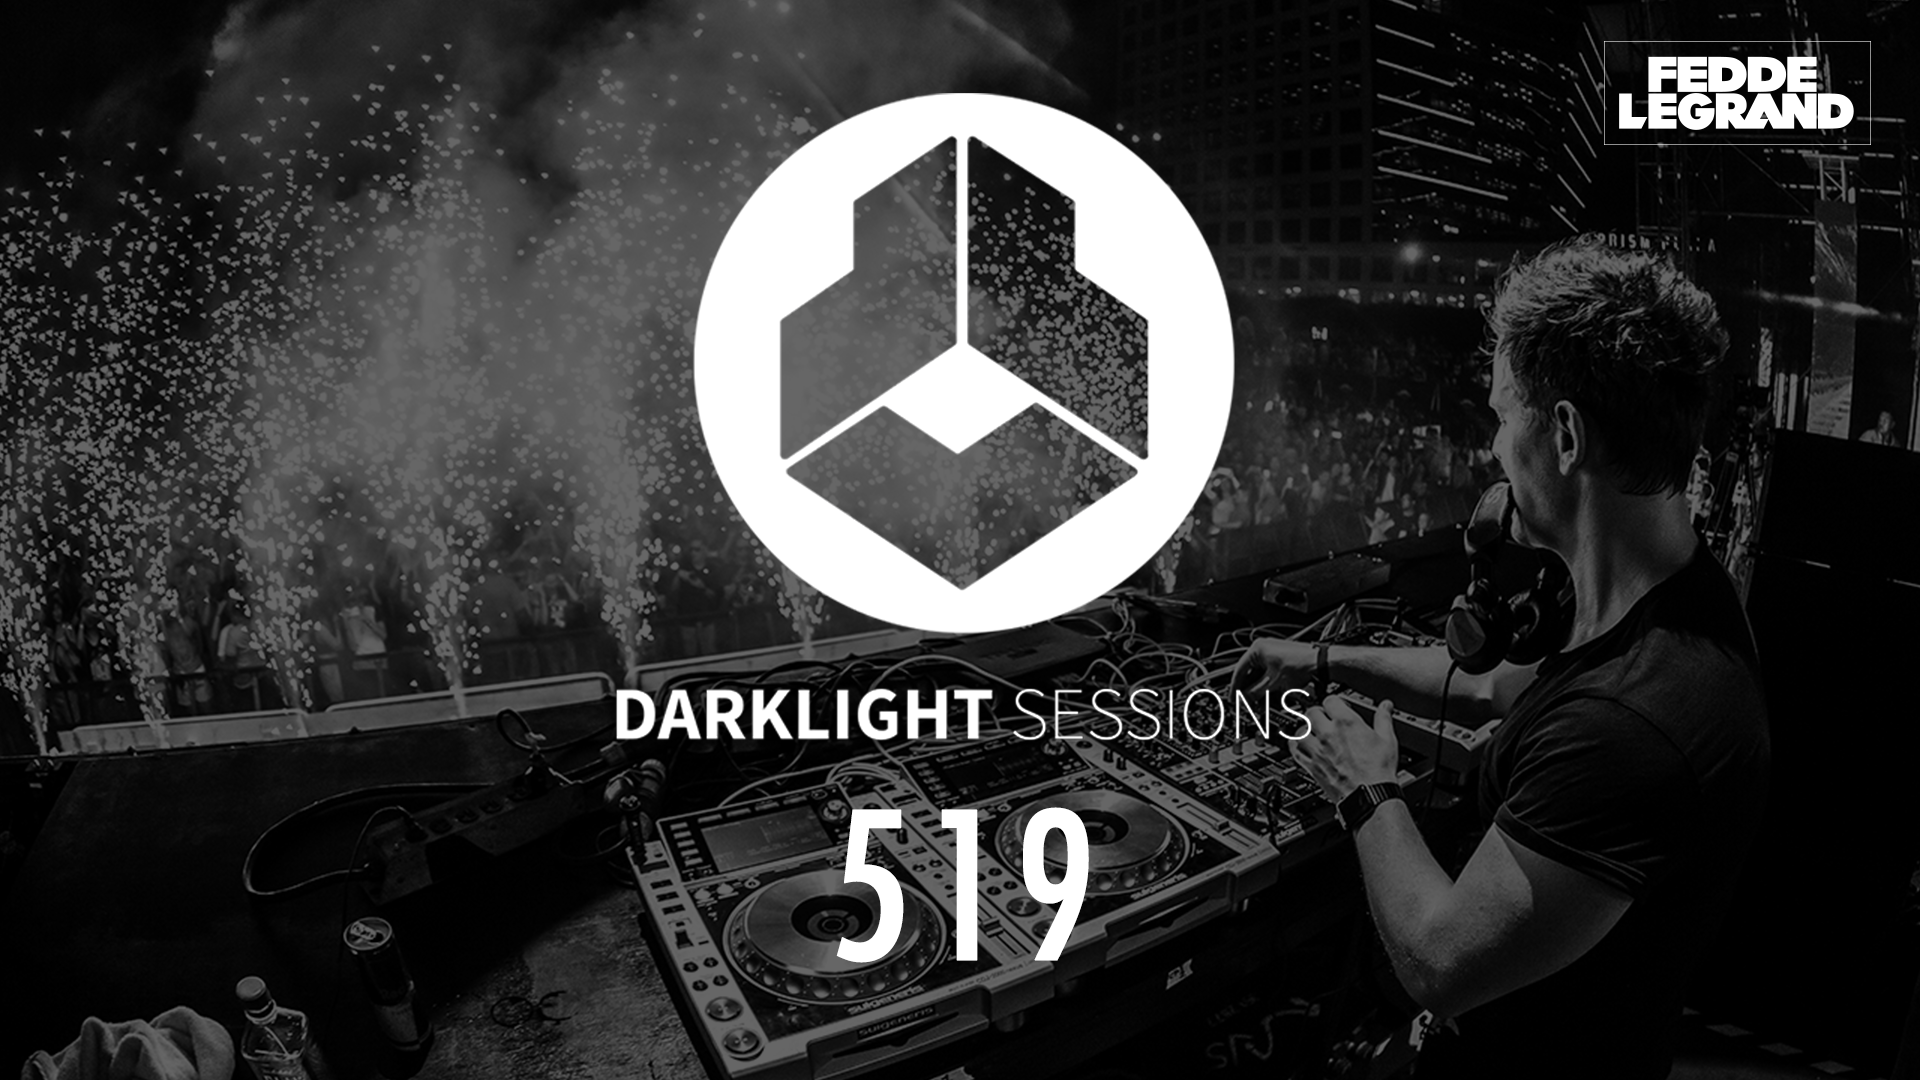 Darklight Sessions 519